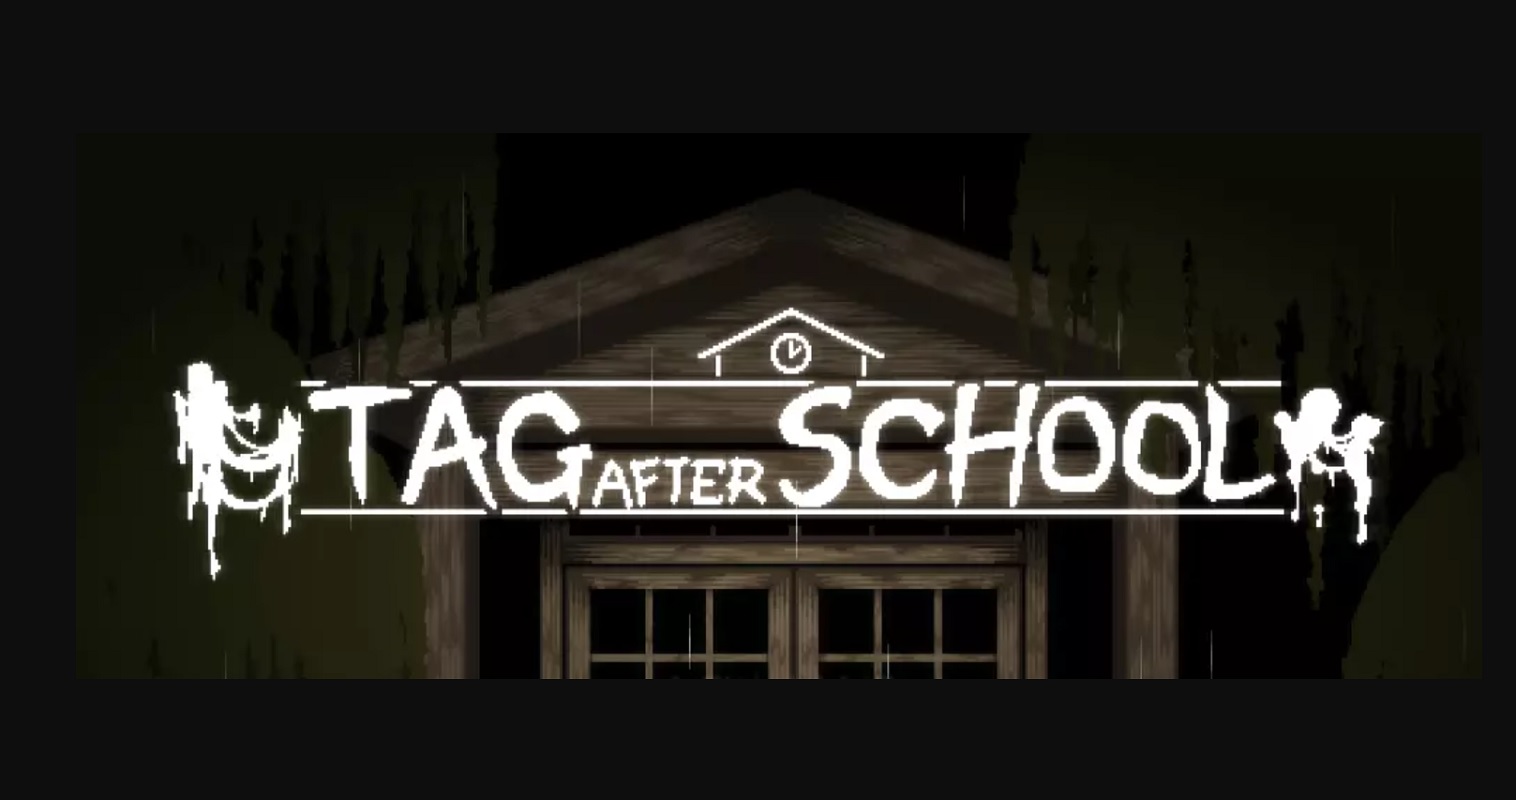 Ini Fitur Game Tag After School Mod! Ada Unlimited Money dan Unlock All Items beserta Link Downloadnya.